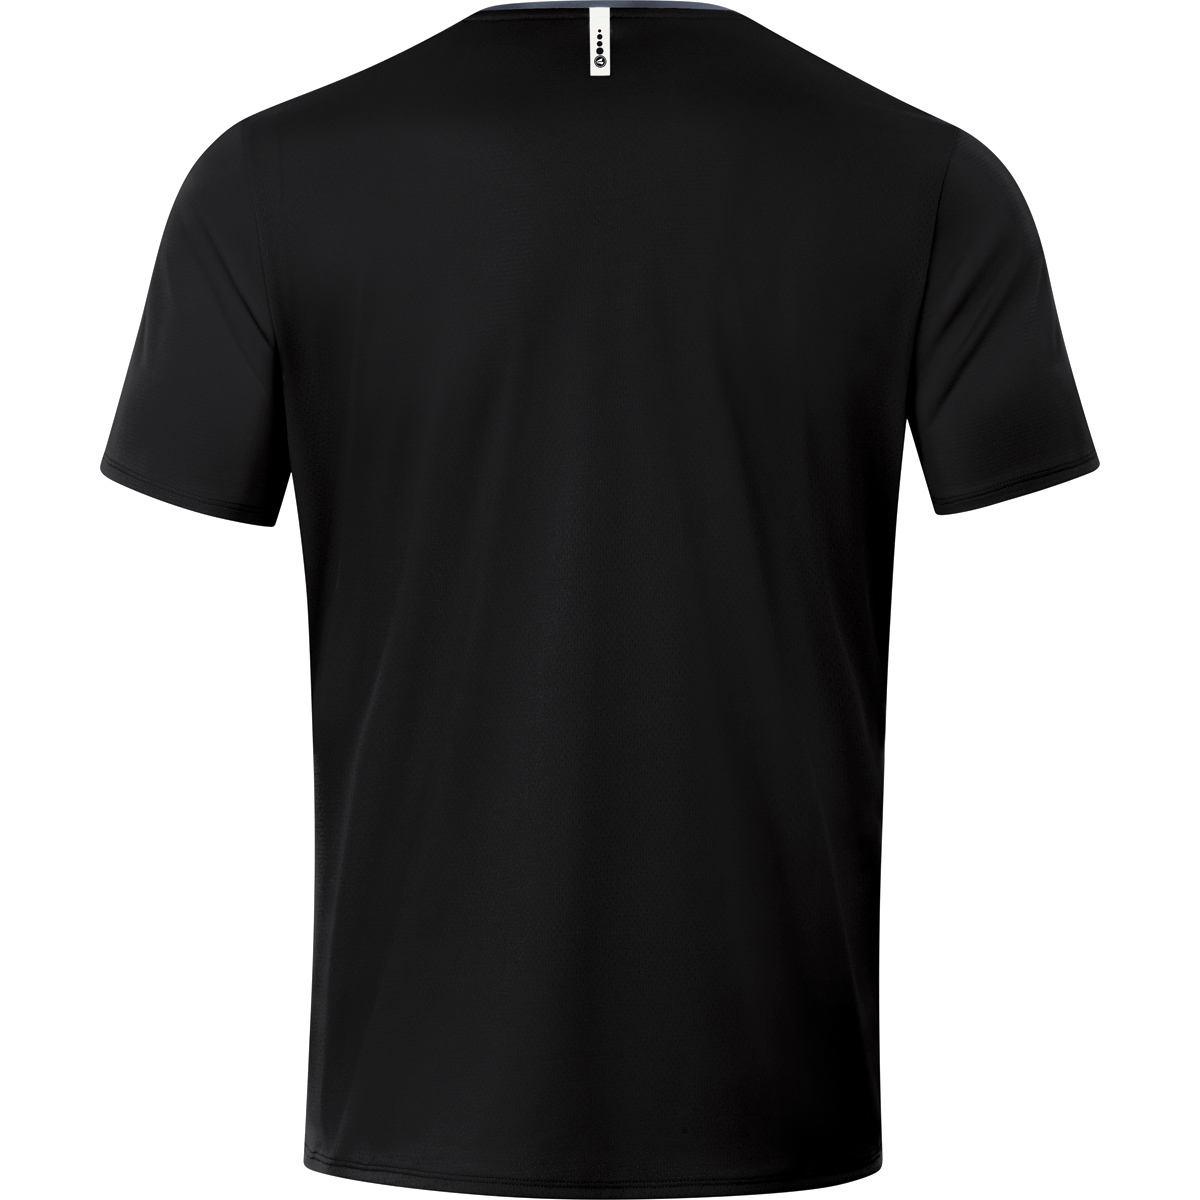 Gr. 2.0 JAKO S, Herren, T-Shirt 6120 schwarz/anthrazit, Champ